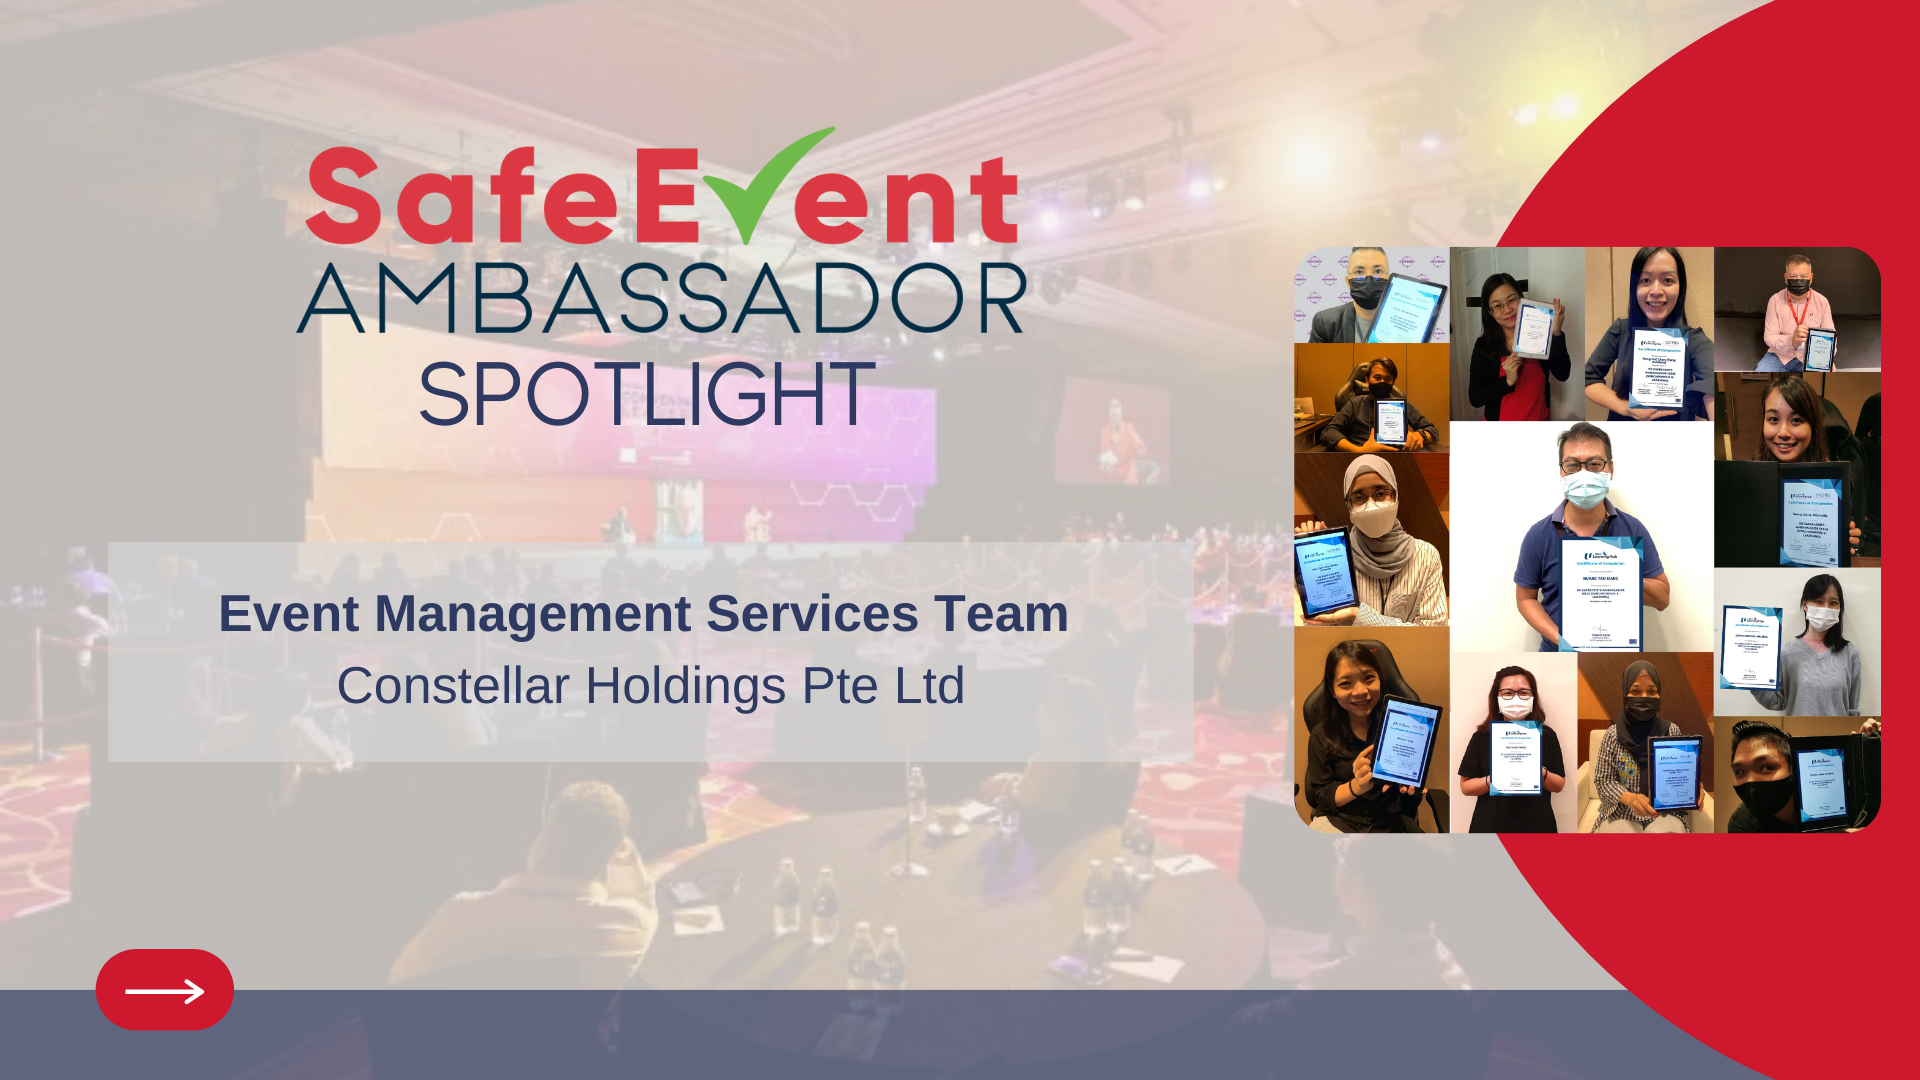 SG SafeEvent Ambassador Spotlight: Event Management Services Team, Constellar Holdings Pte Ltd